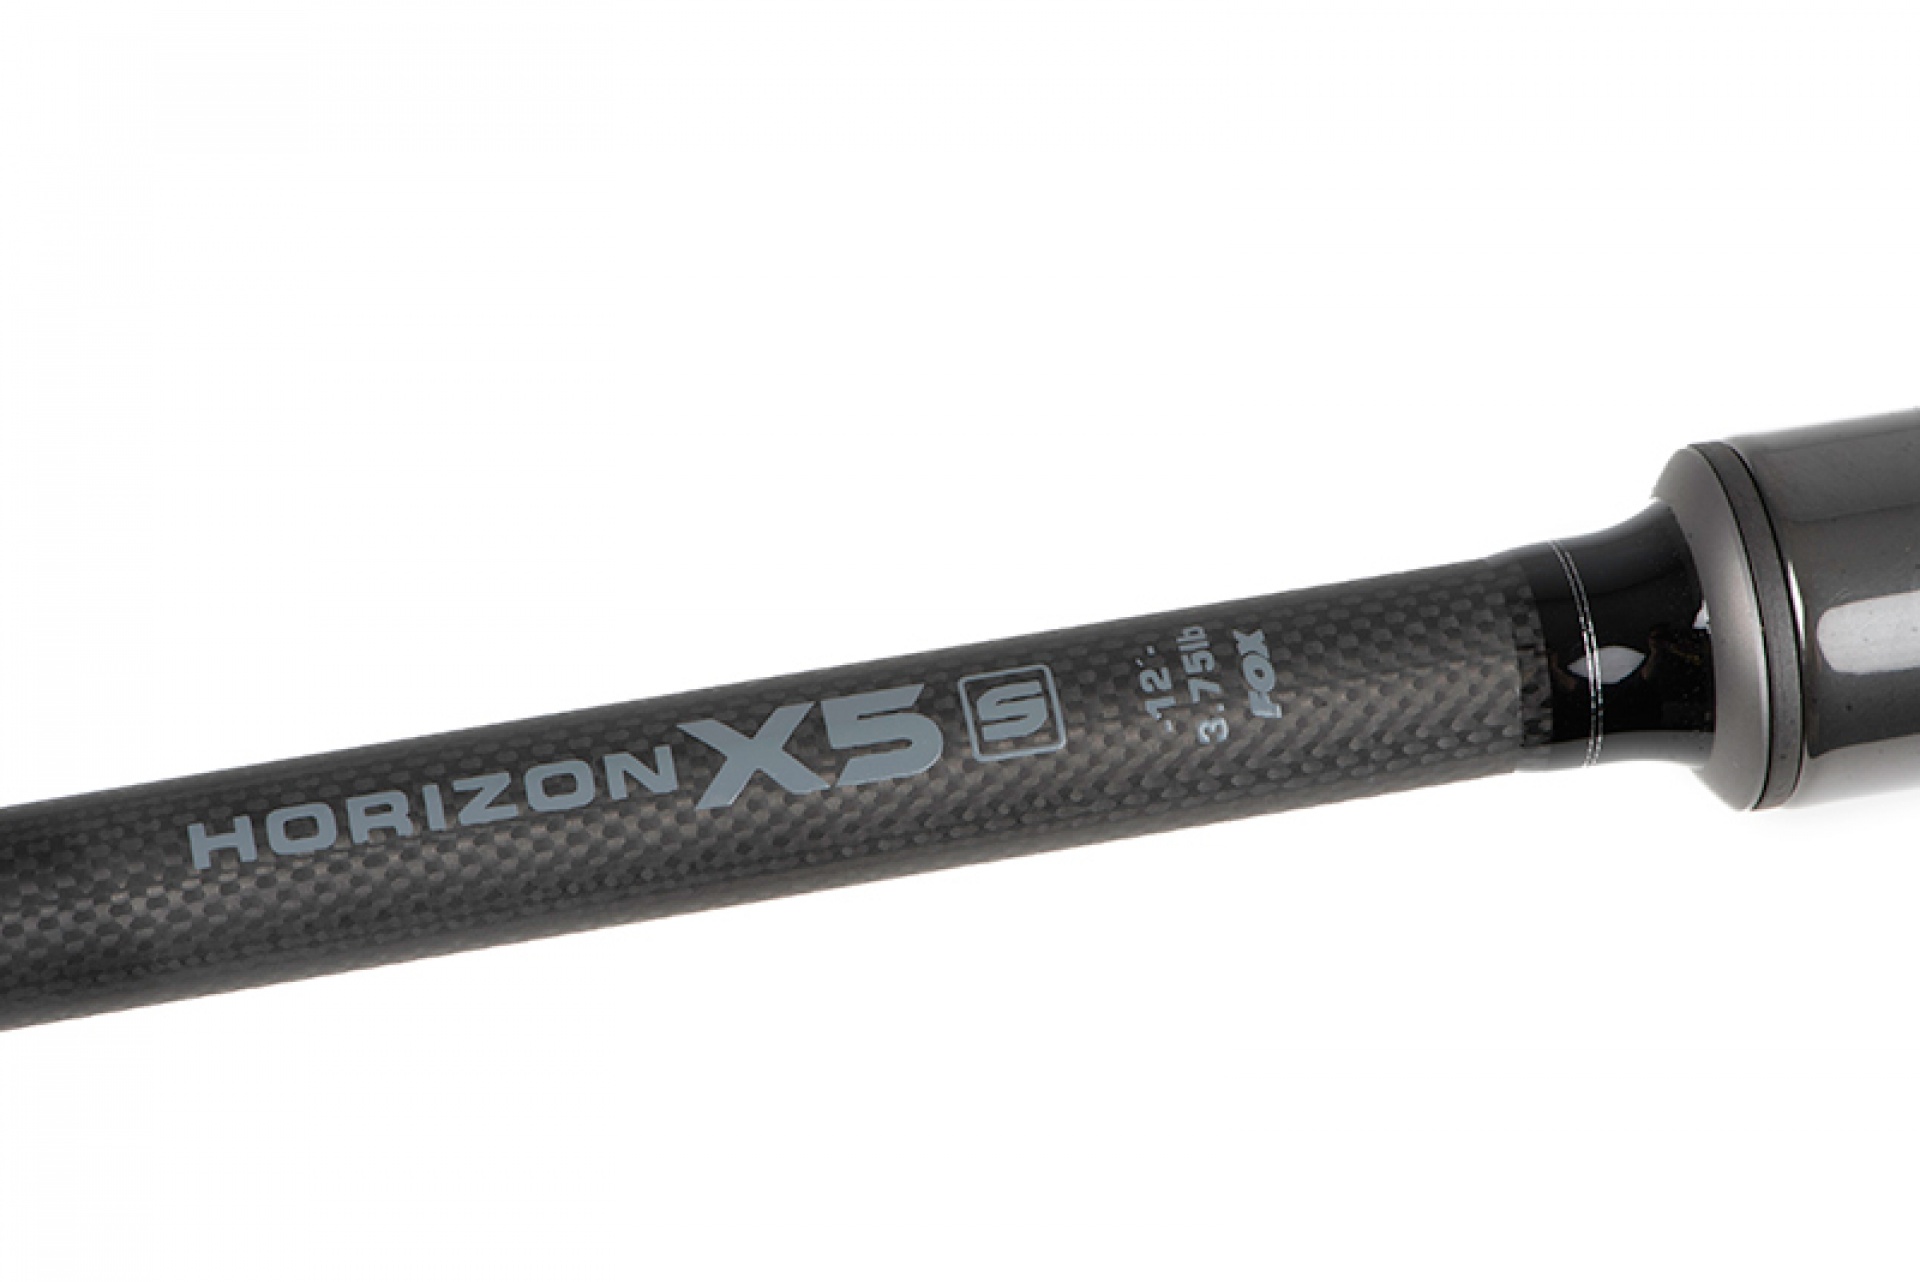 Fox Horizon X5-S Full Shrink Handle